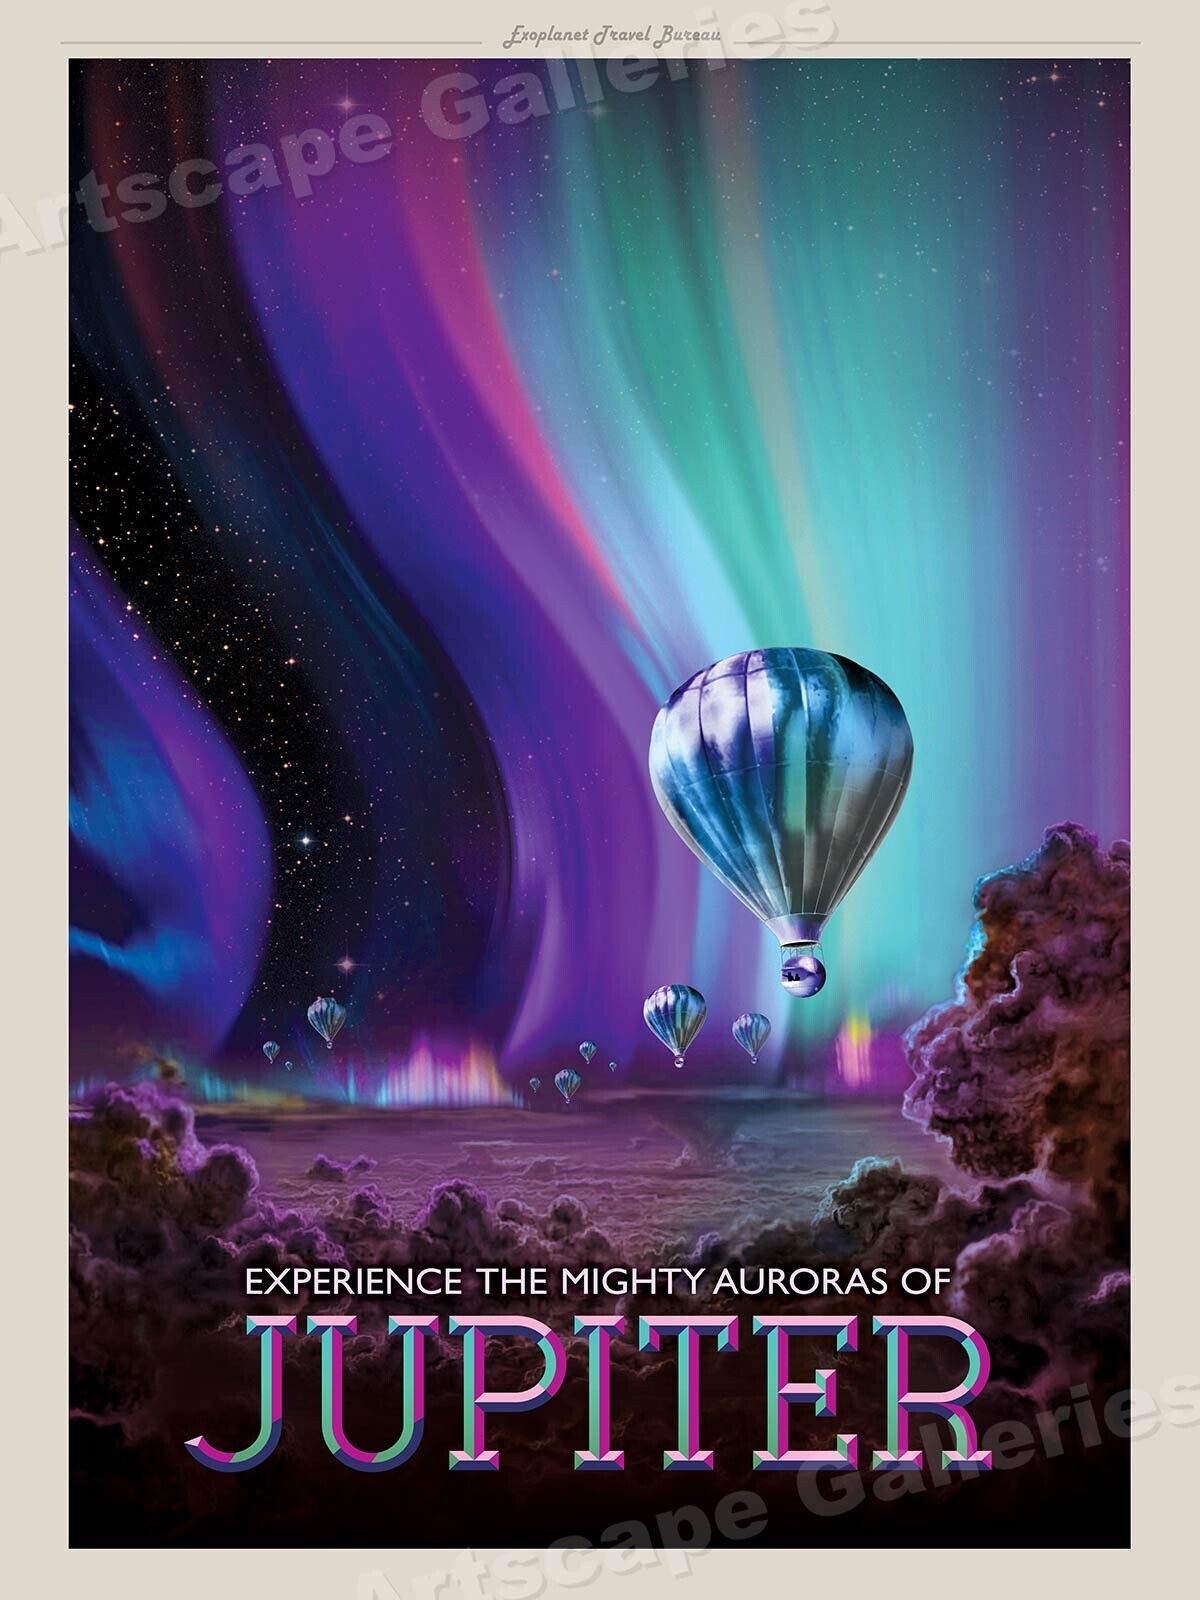 “Visit Jupiter” Retro Style Classic Jupiter Space Exploration Poster - 18x24